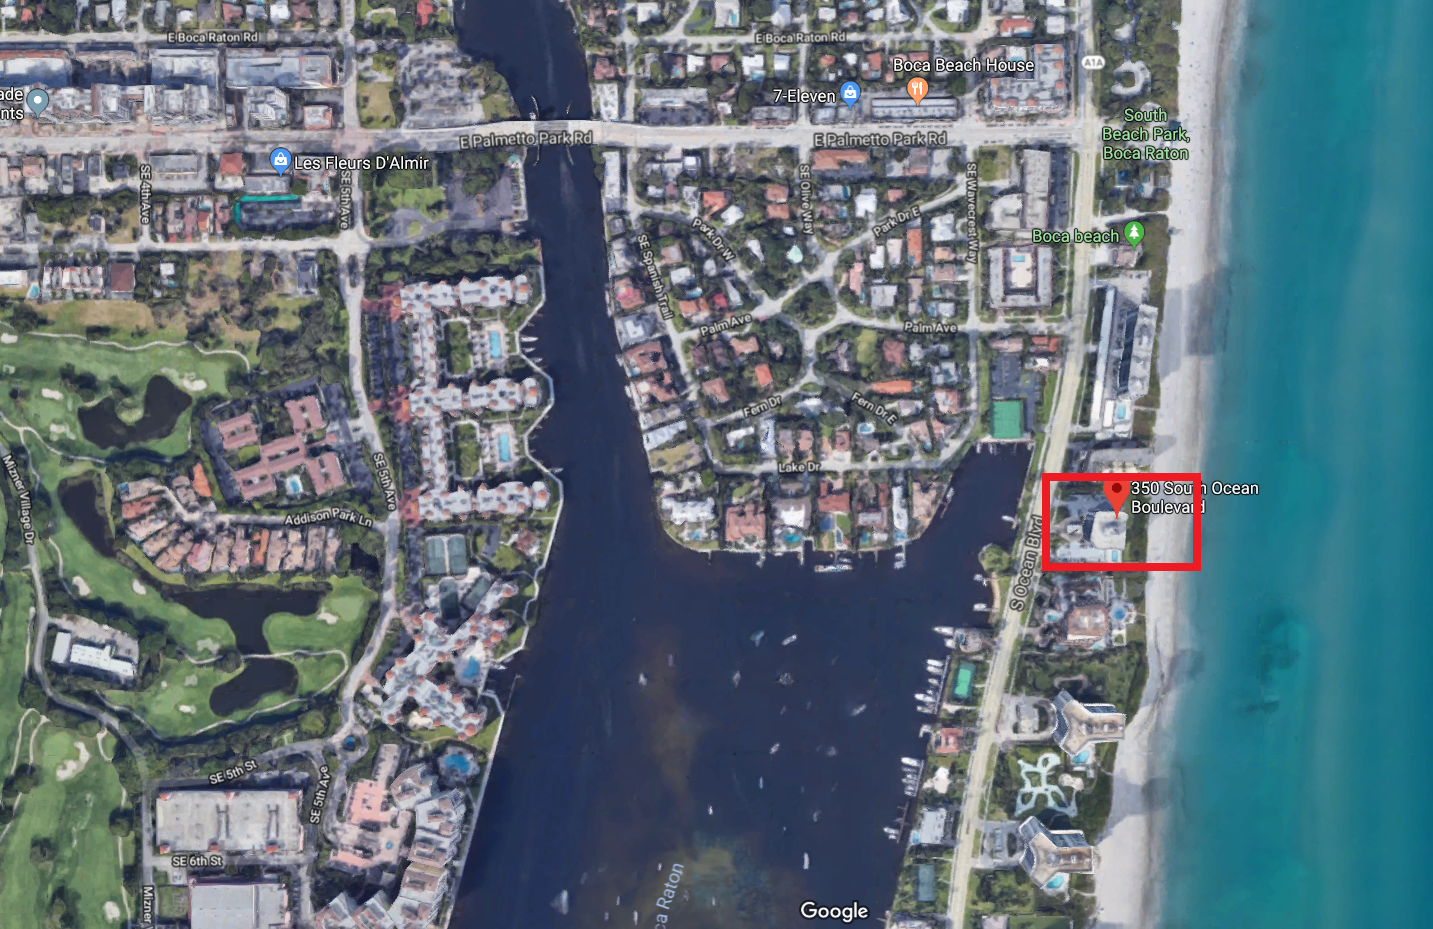 Beresford 350 S Ocean blvd Boca Raton FL 33432 luxury oceanfront condos for sale aerial view